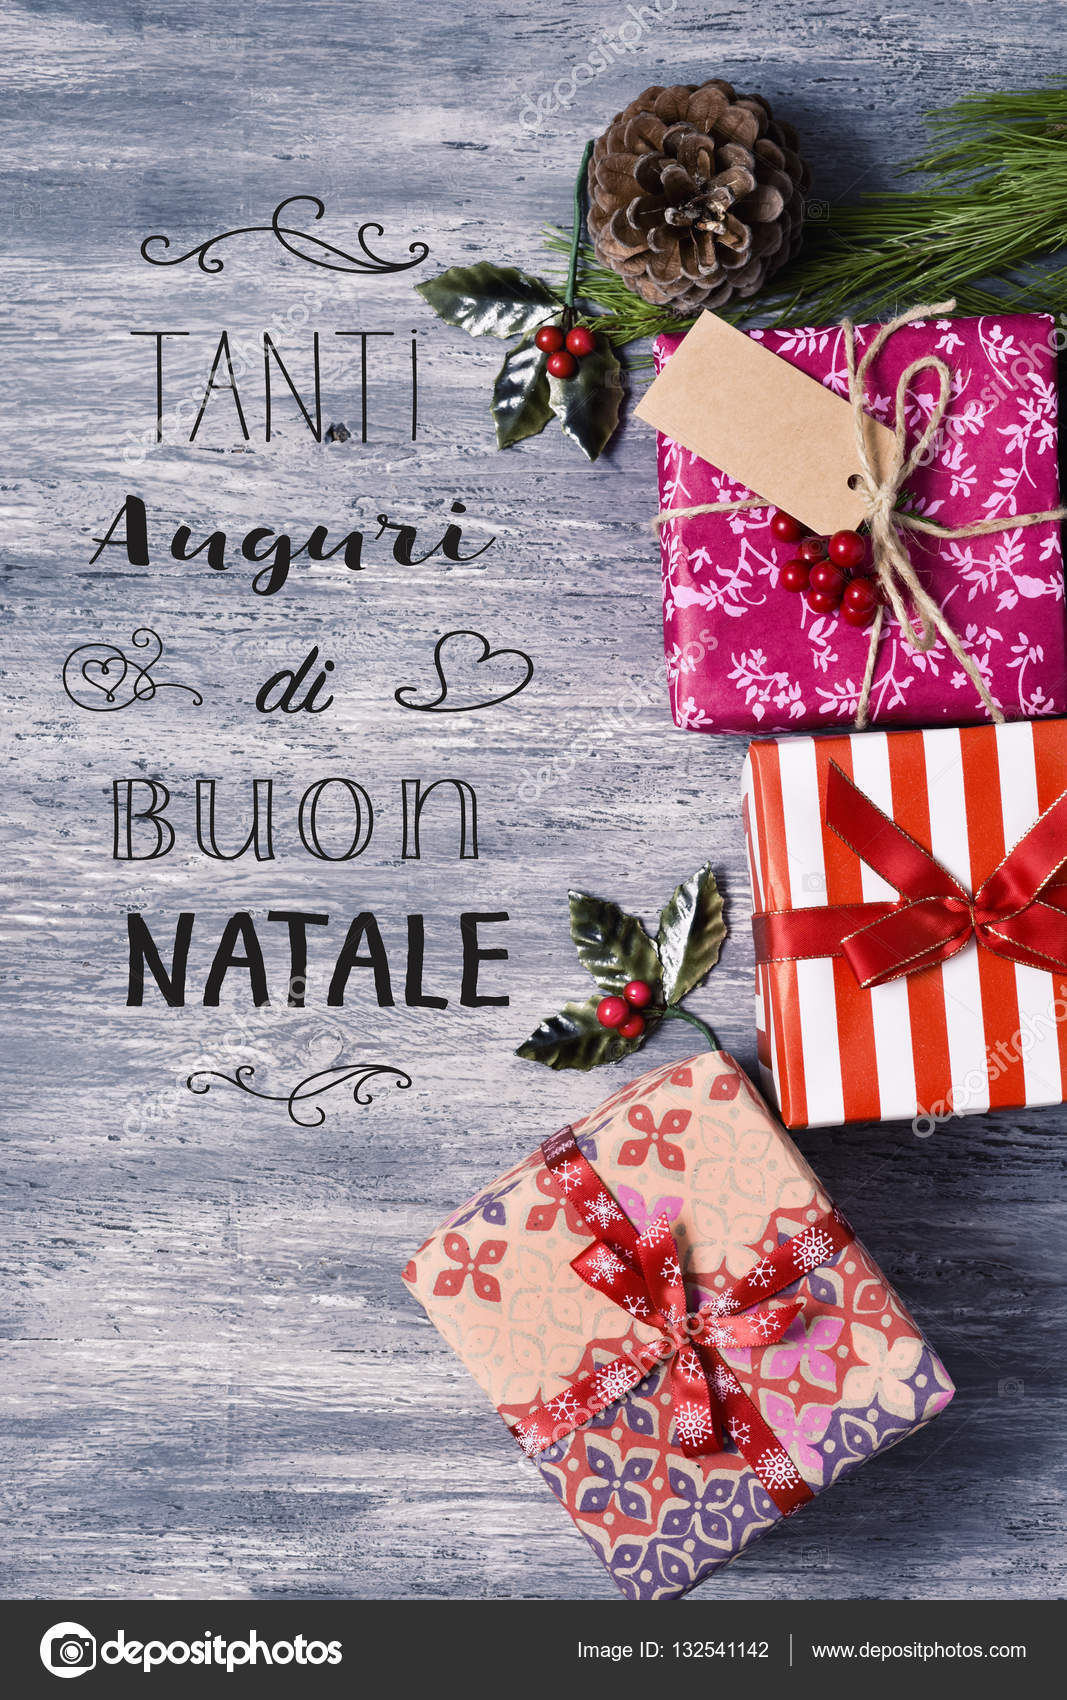 Buon Natale Tanti Auguri.Text Tanti Auguri Di Buon Natale Merry Christmas In Italian Stock Photo C Nito103 132541142